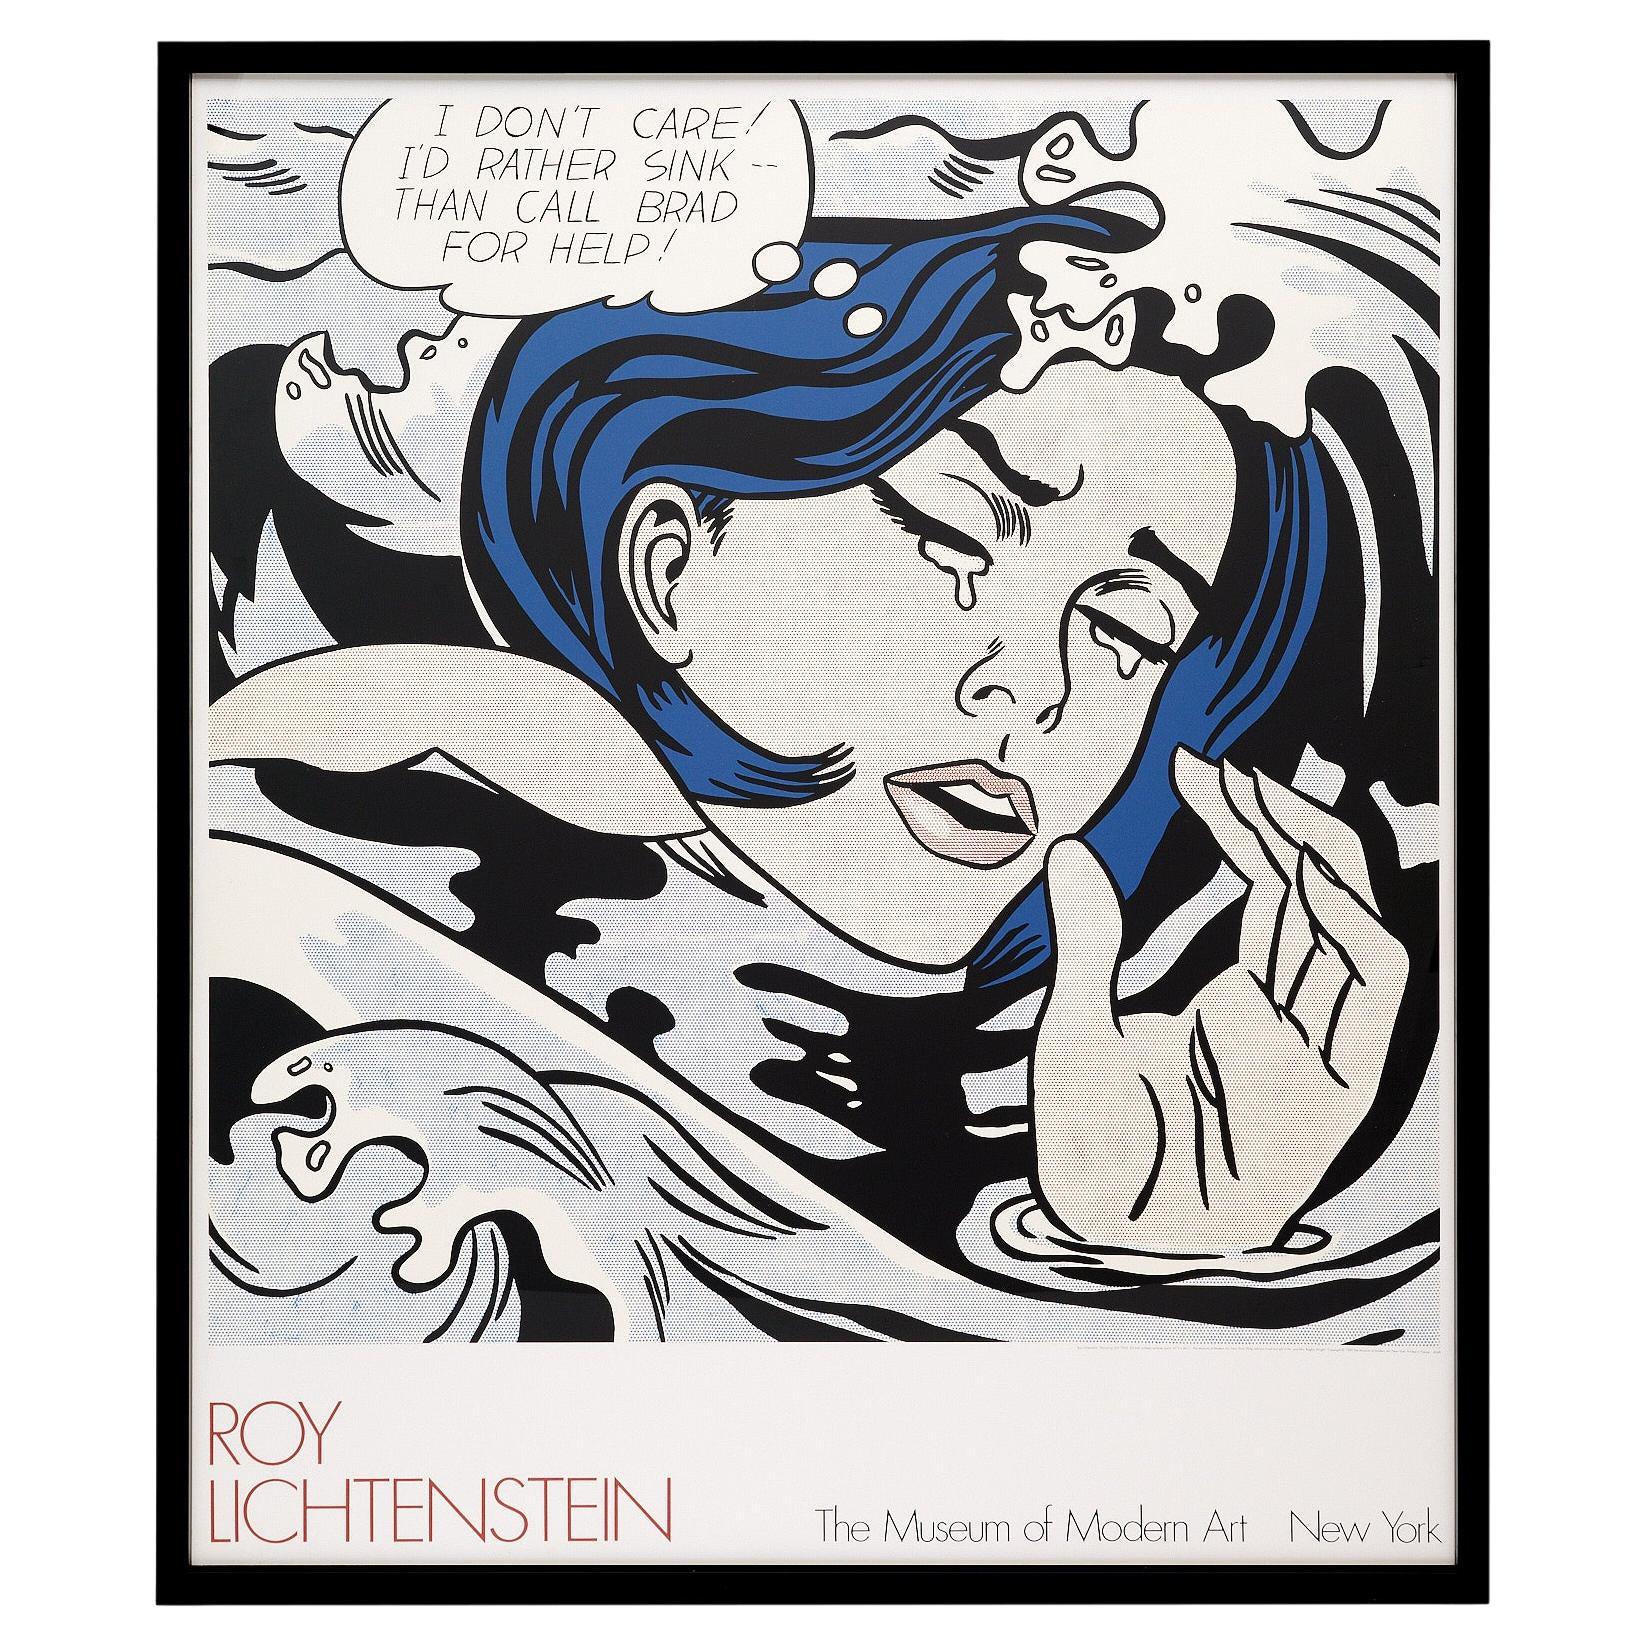 Roy Lichtenstein “Drowning Girl” New York MoMA Print For Sale